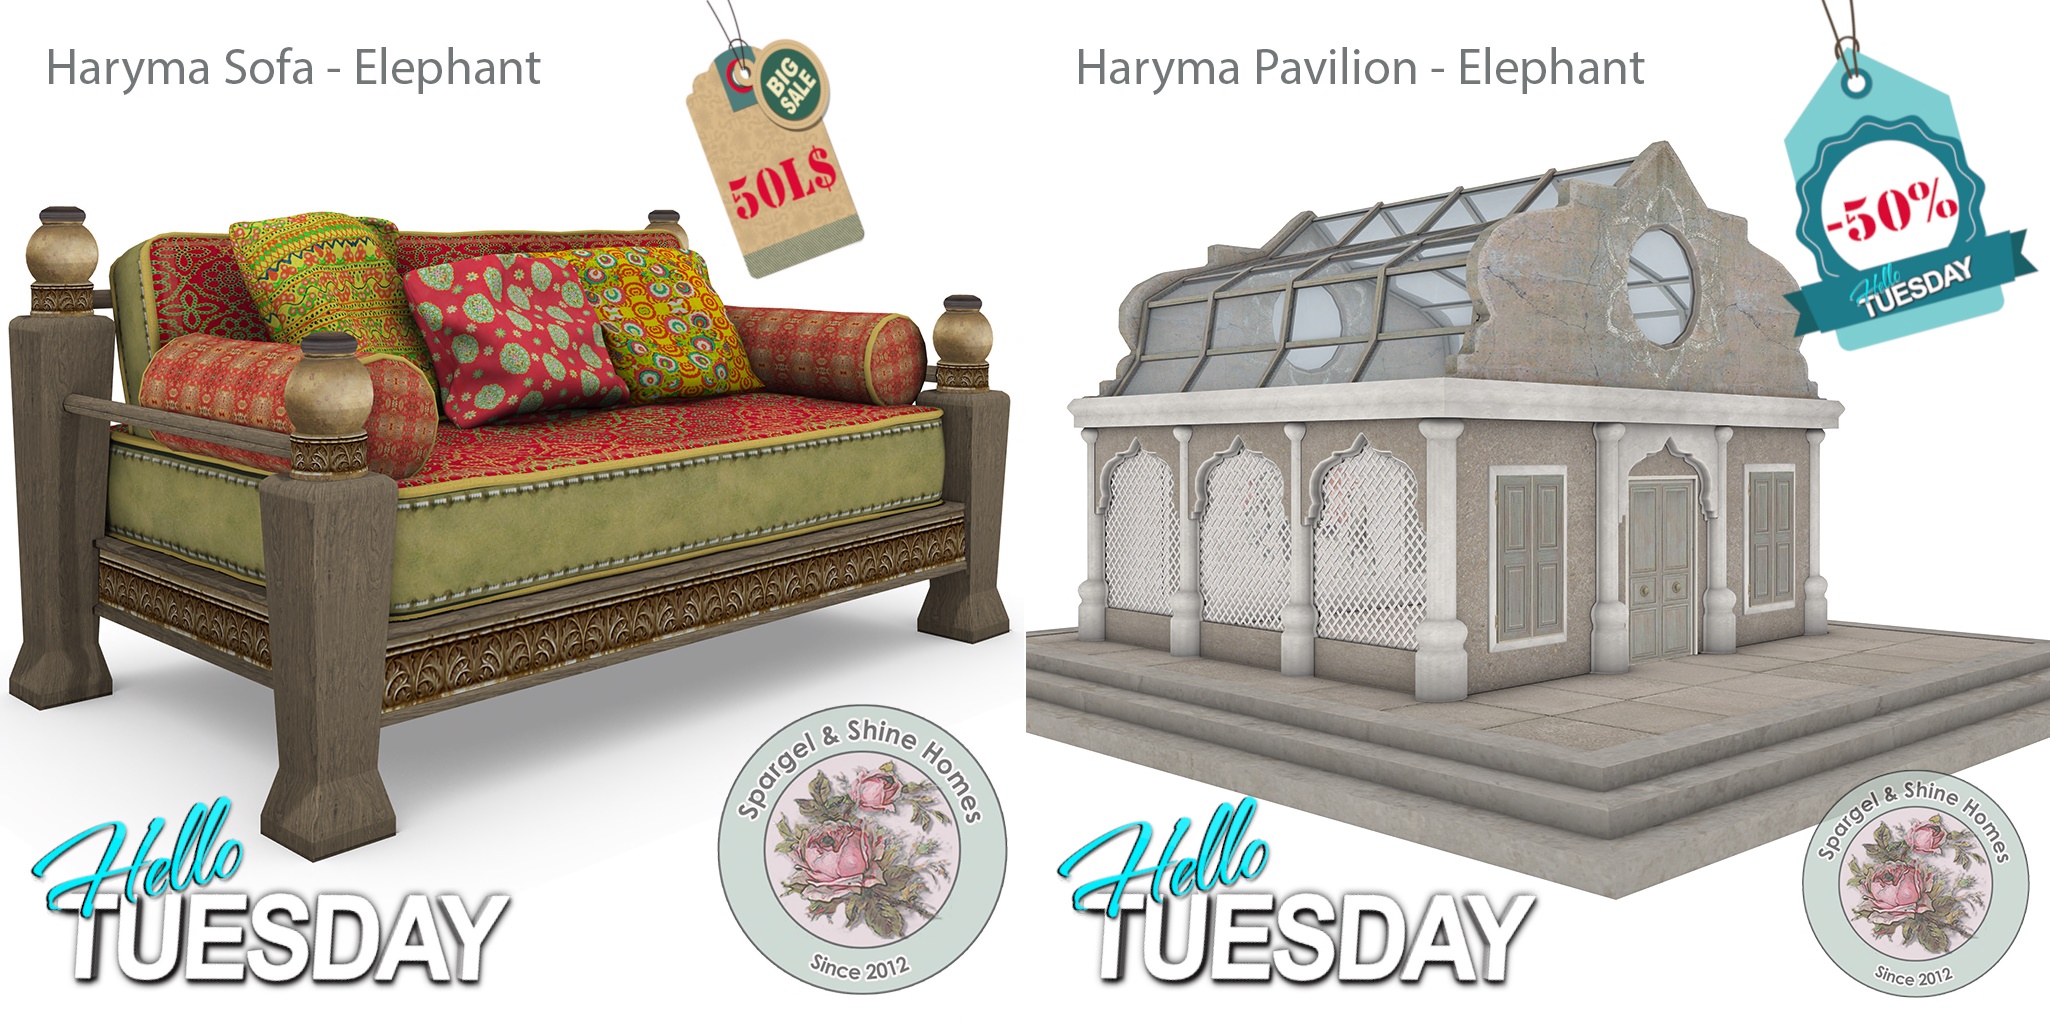 Spargel & Shine – Haryma Pavilion & Haryma Sofa